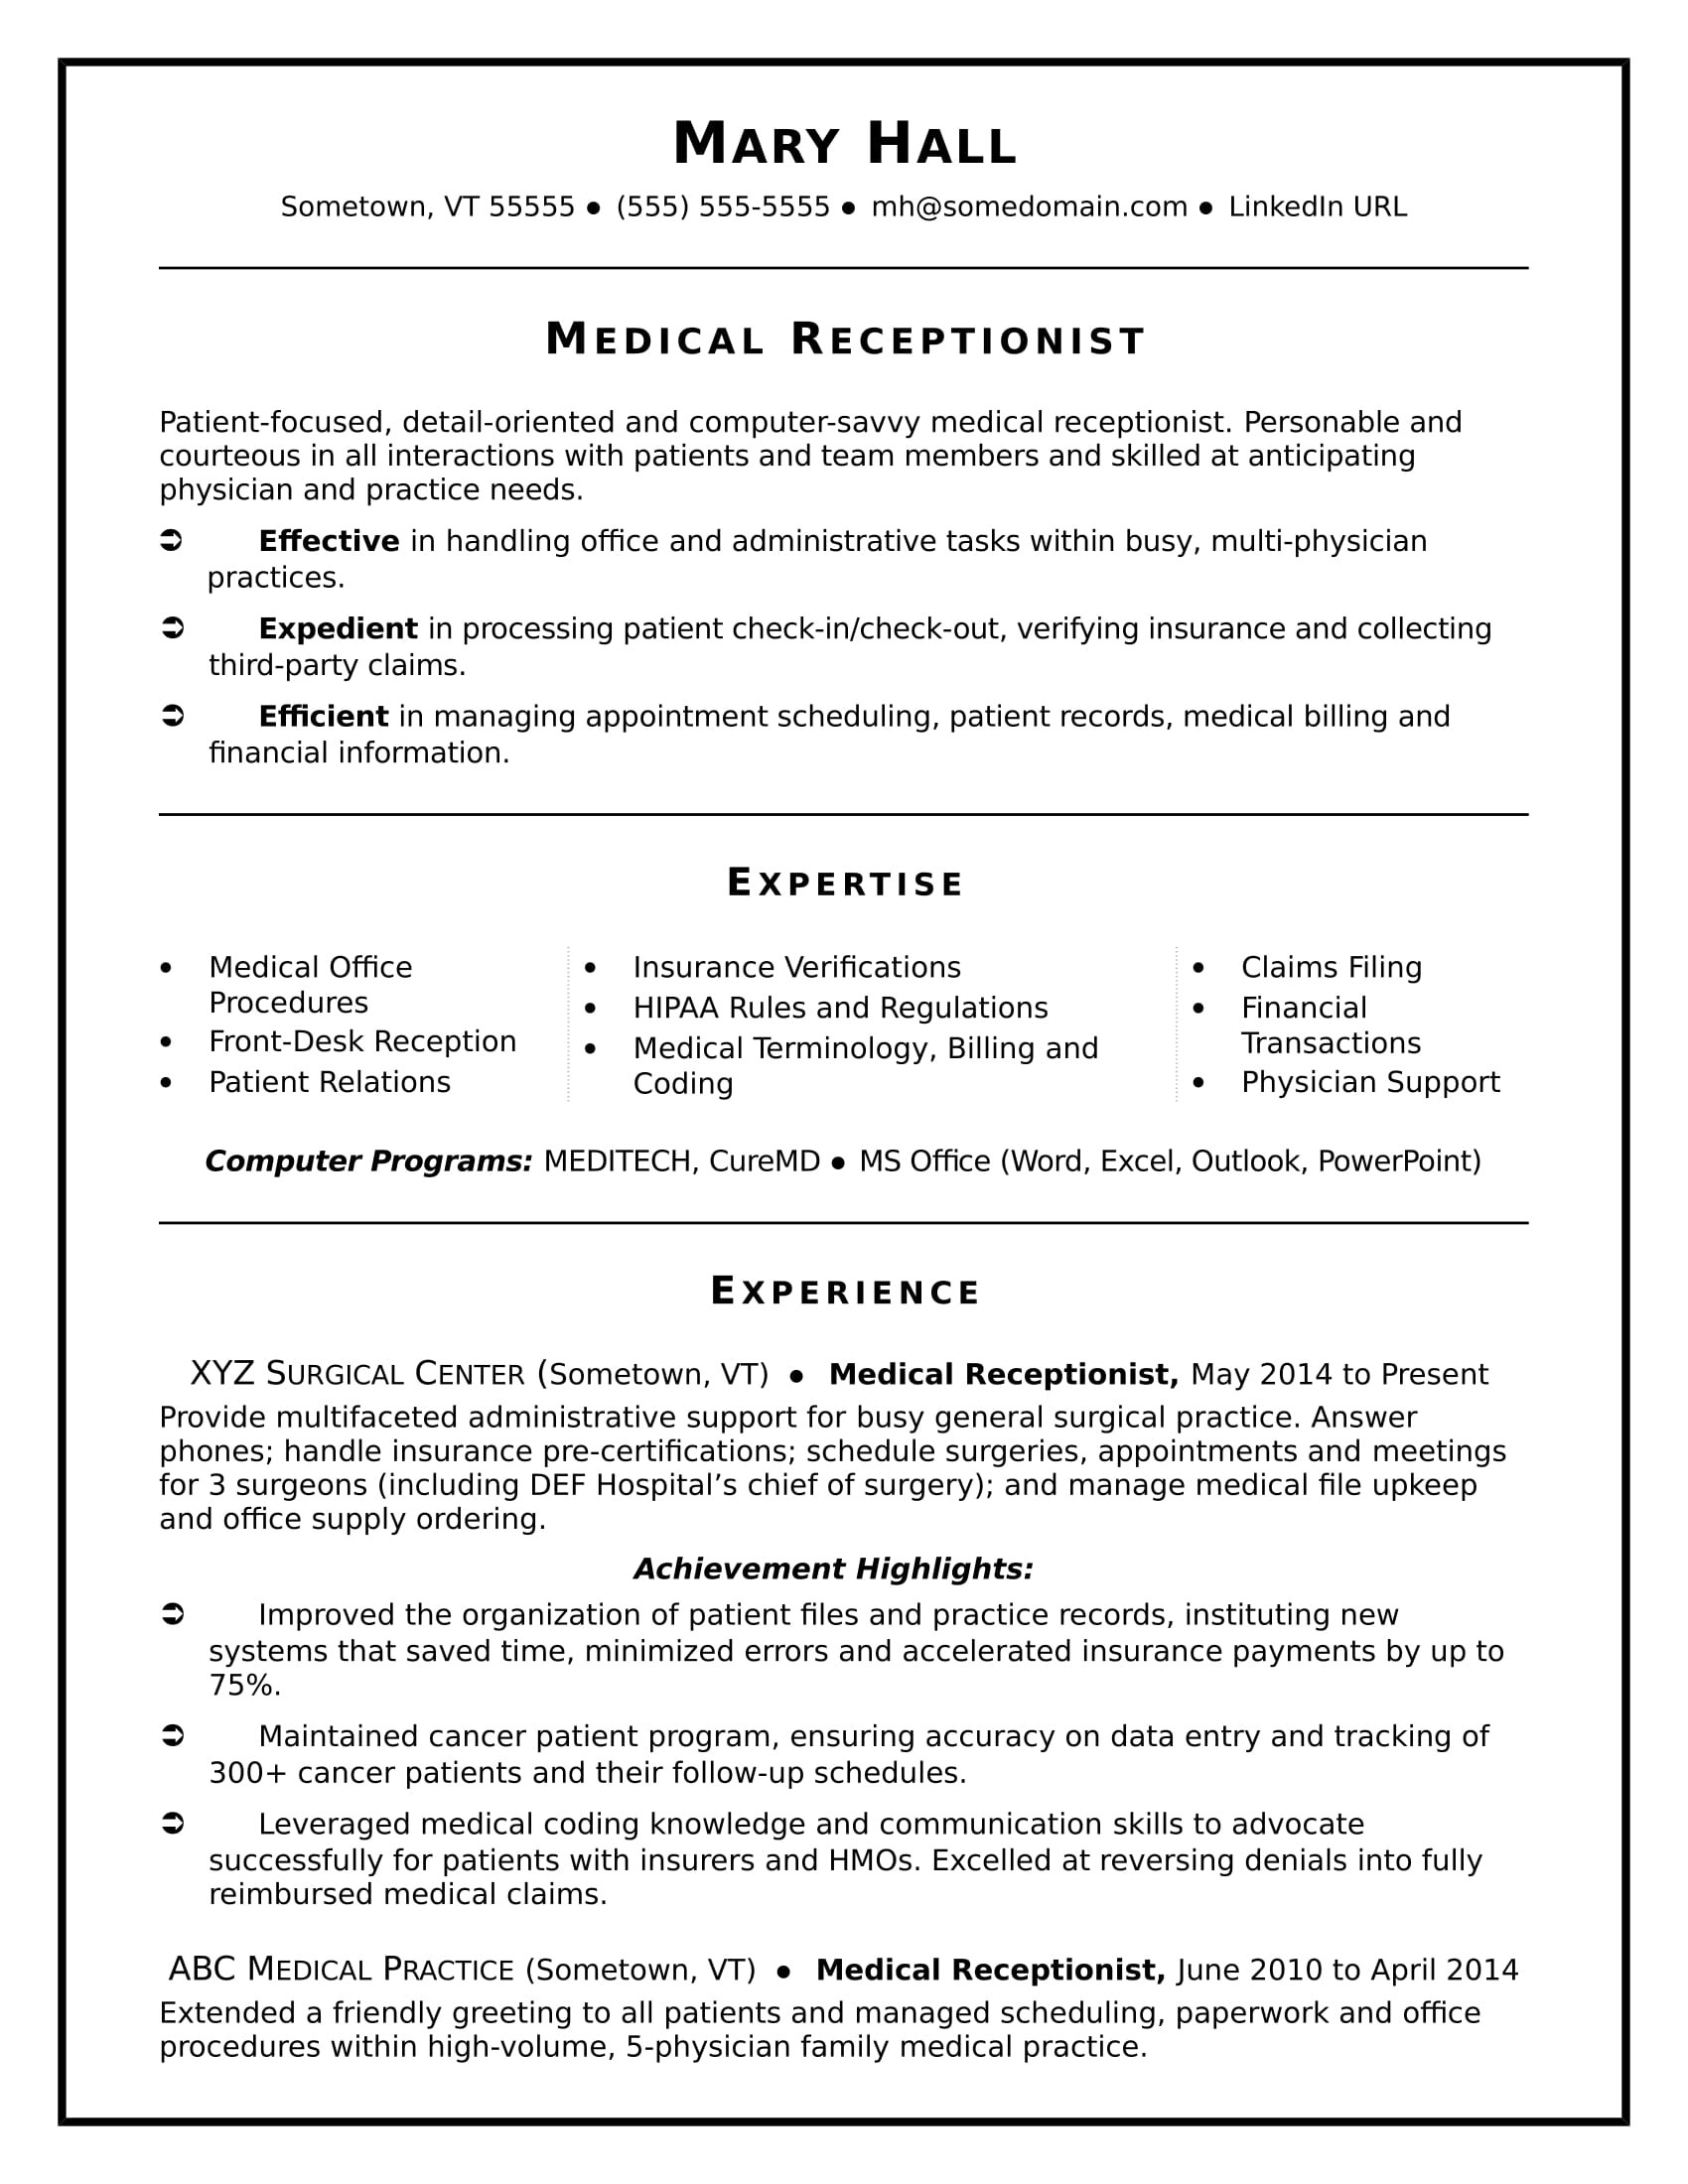 Sample Resume for Medical Receptionist with No Experience Medical Receptionist Resume Sample Monster.com